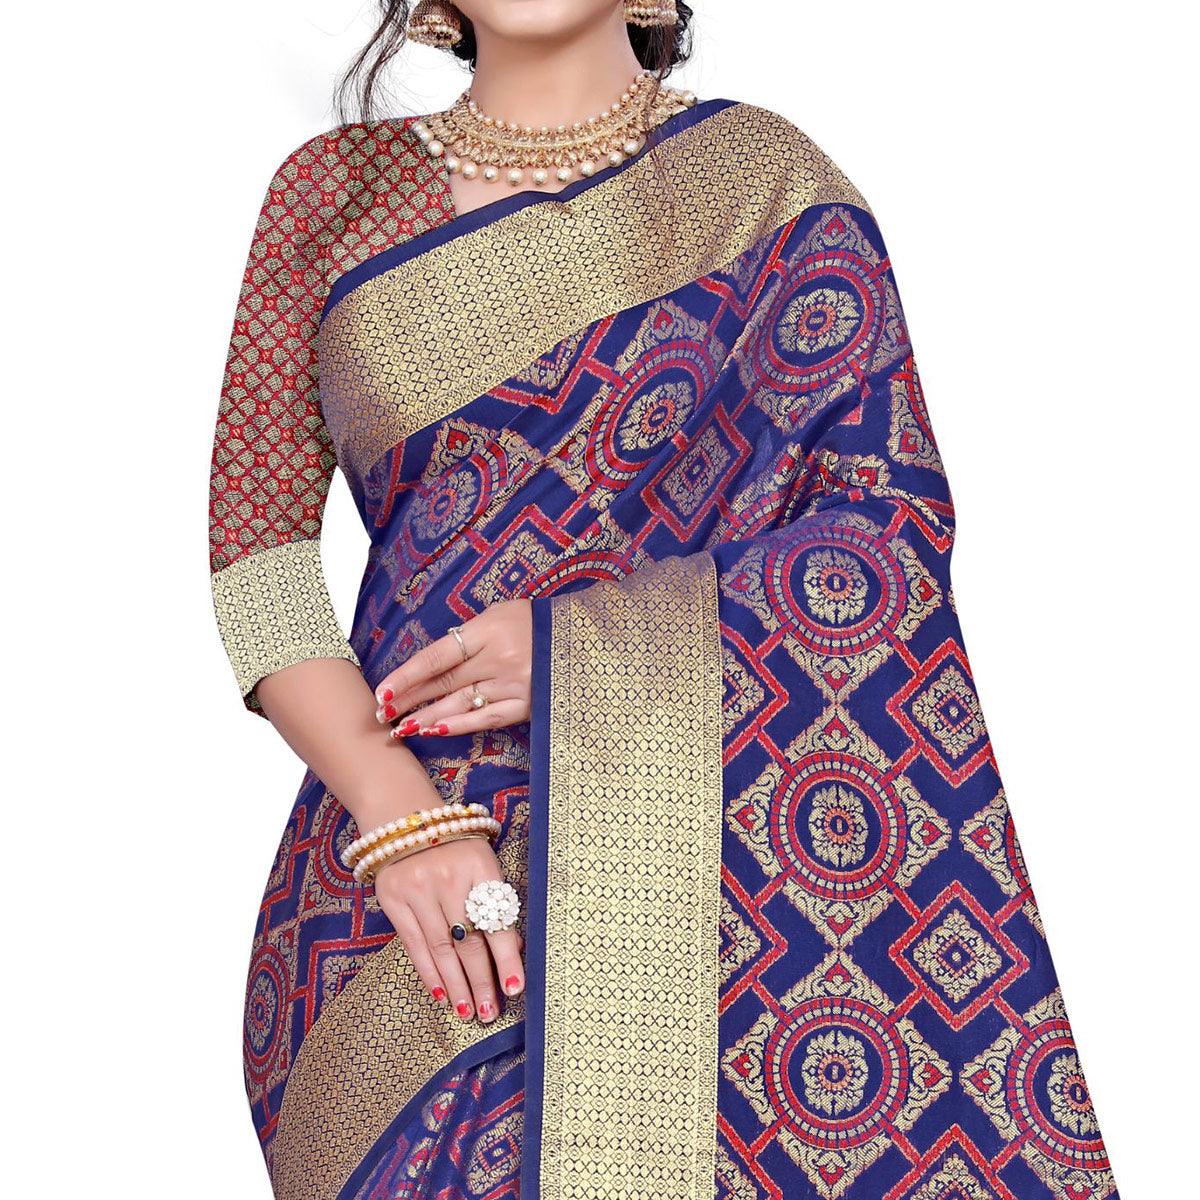 Adorable Blue Colored Festive Wear Woven Banarasi Silk Saree - Peachmode